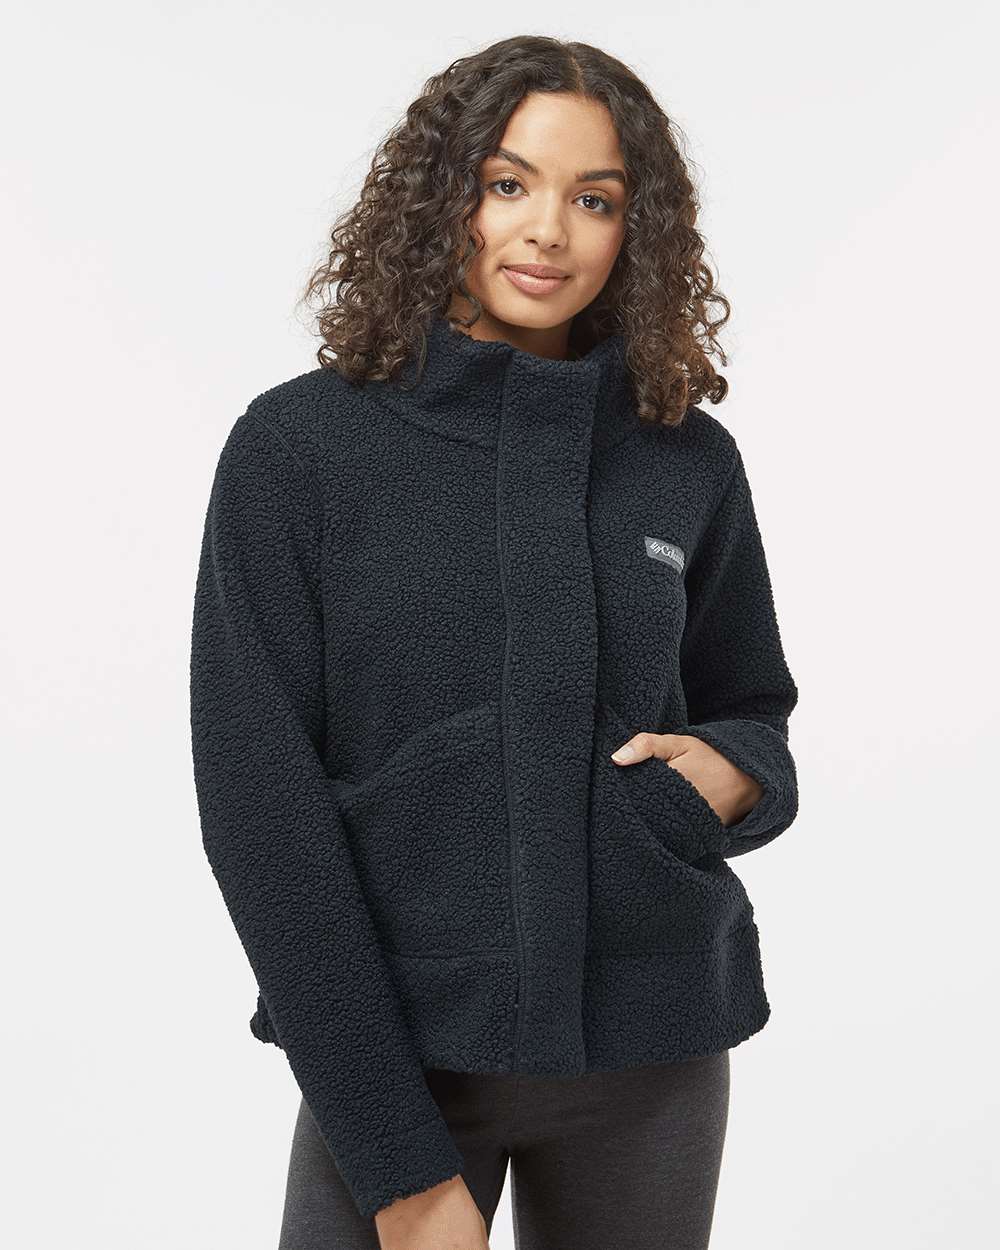 Columbia Panorama Snap Fleece Jacket - Women's casual jacket